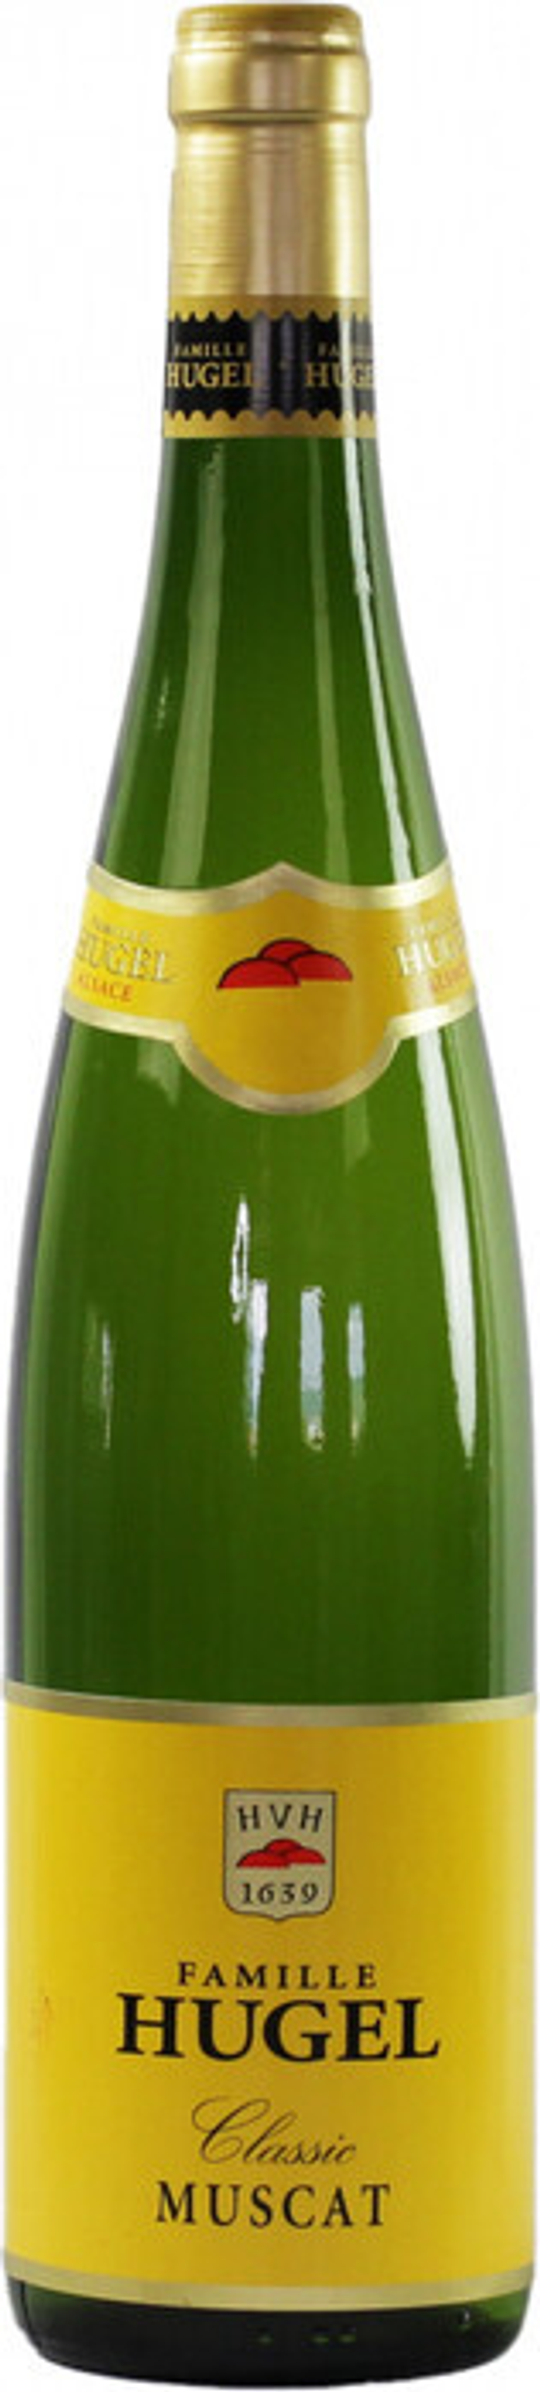 Вино Hugel Muscat Alsace AOC, 0,75 л.